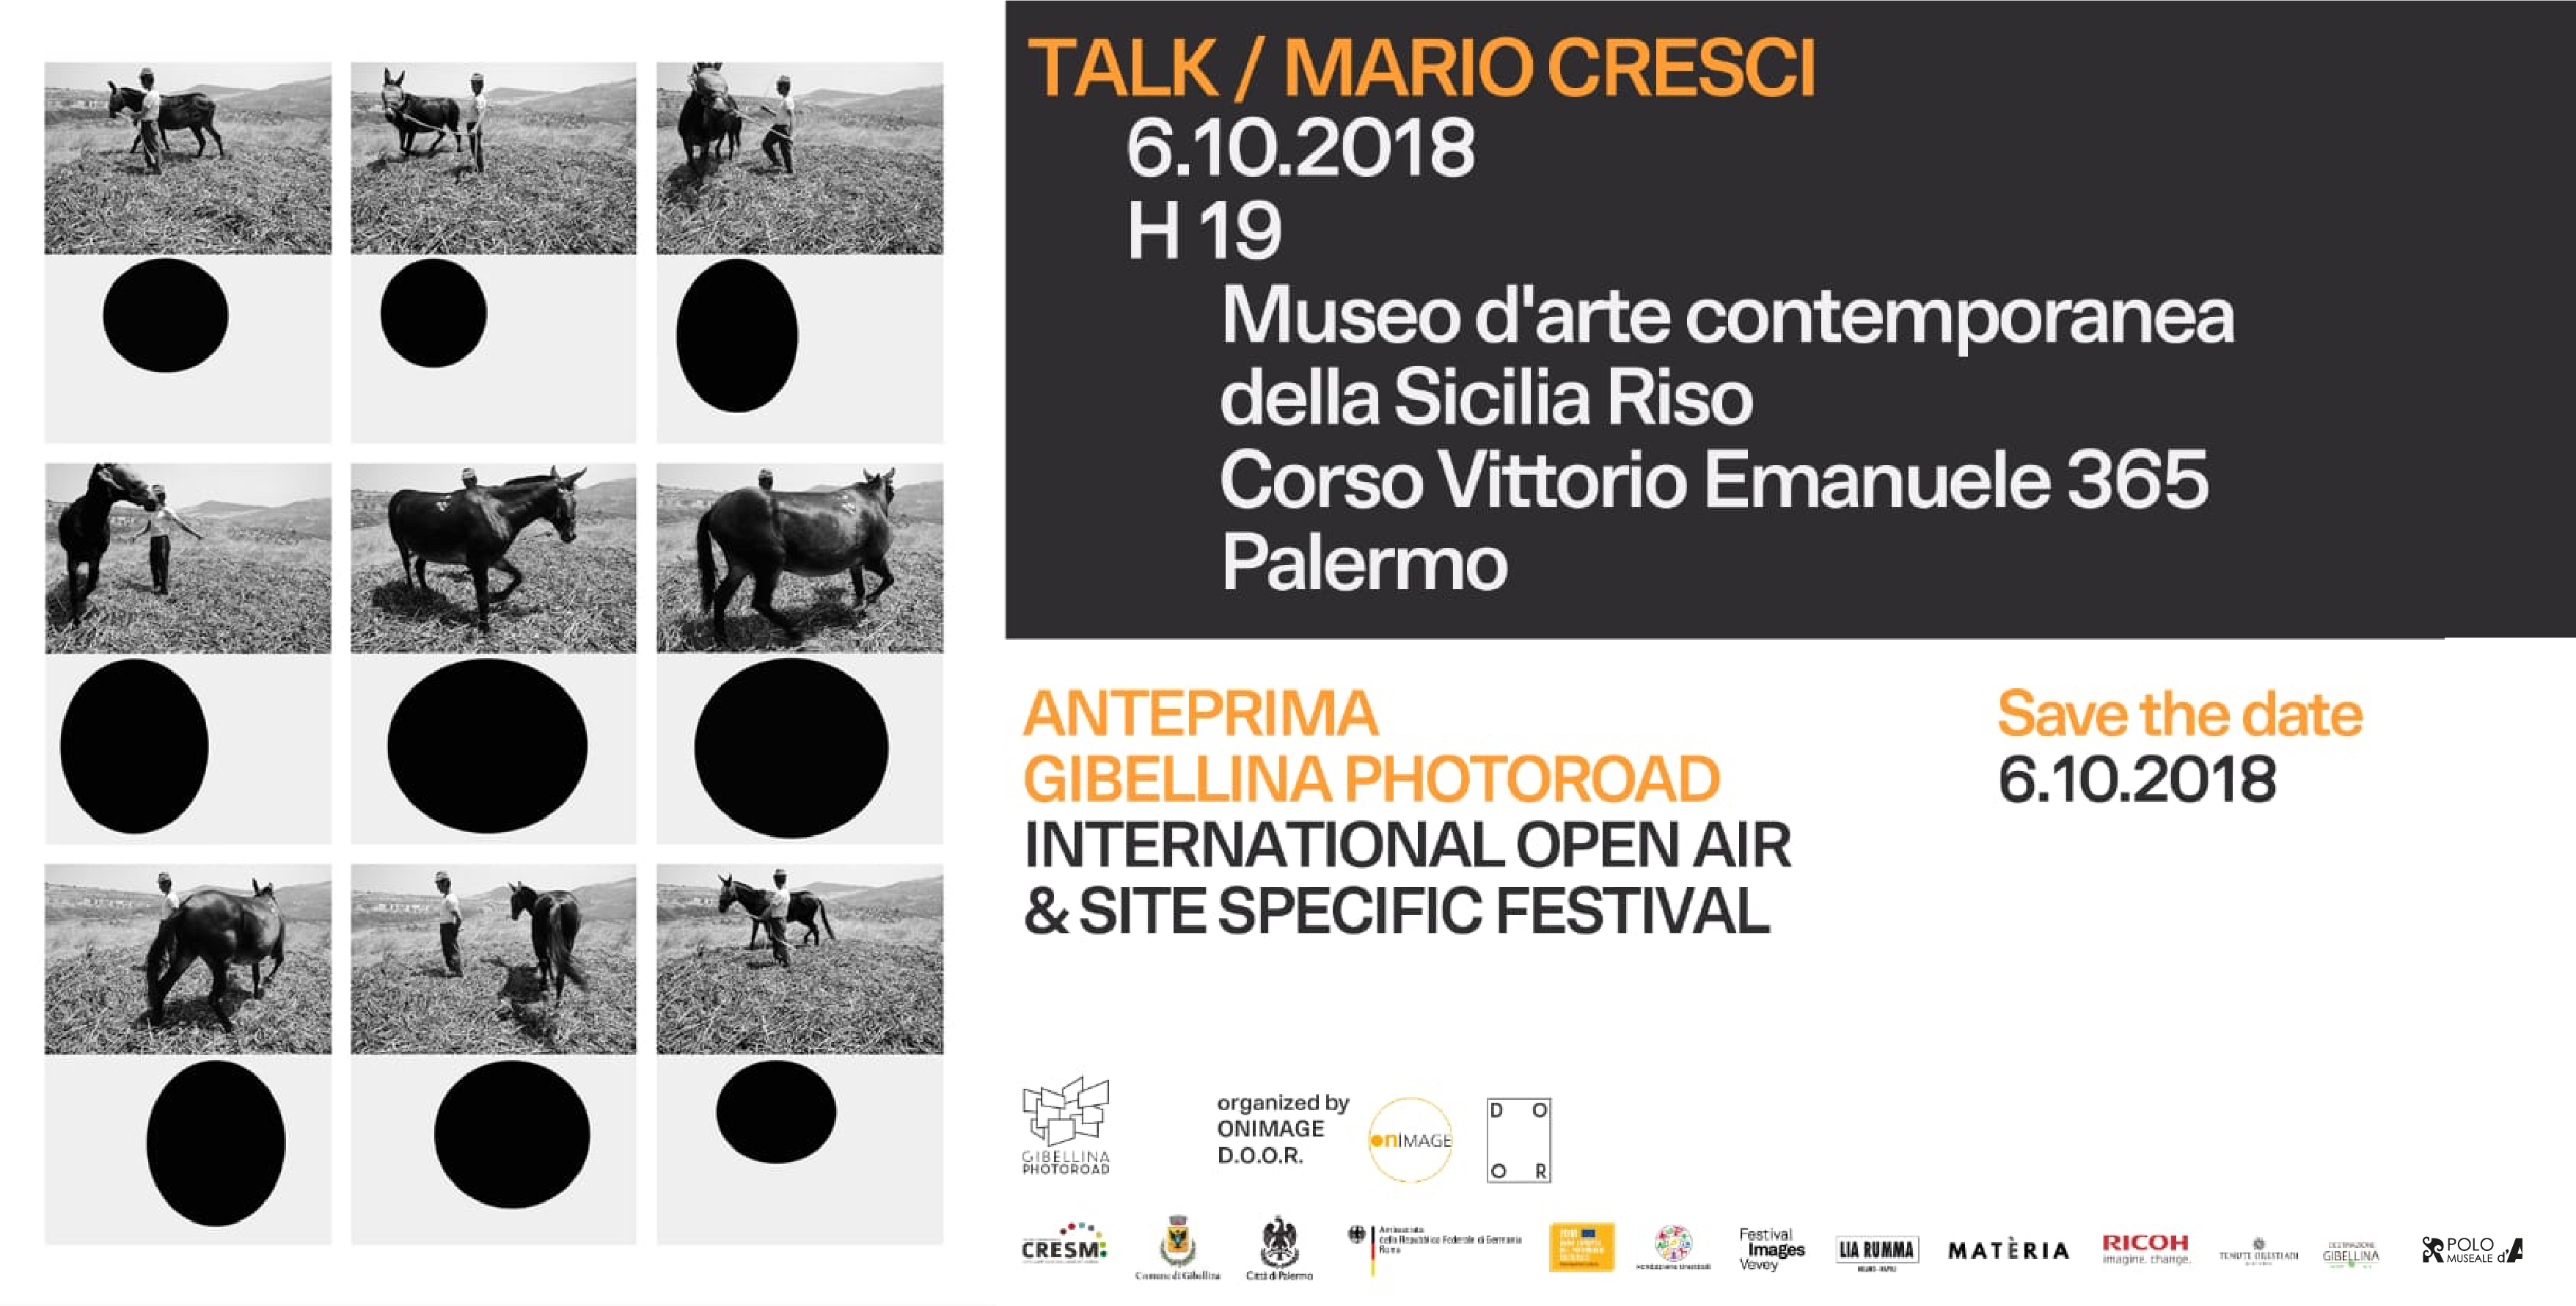 Talk / Mario Cresci